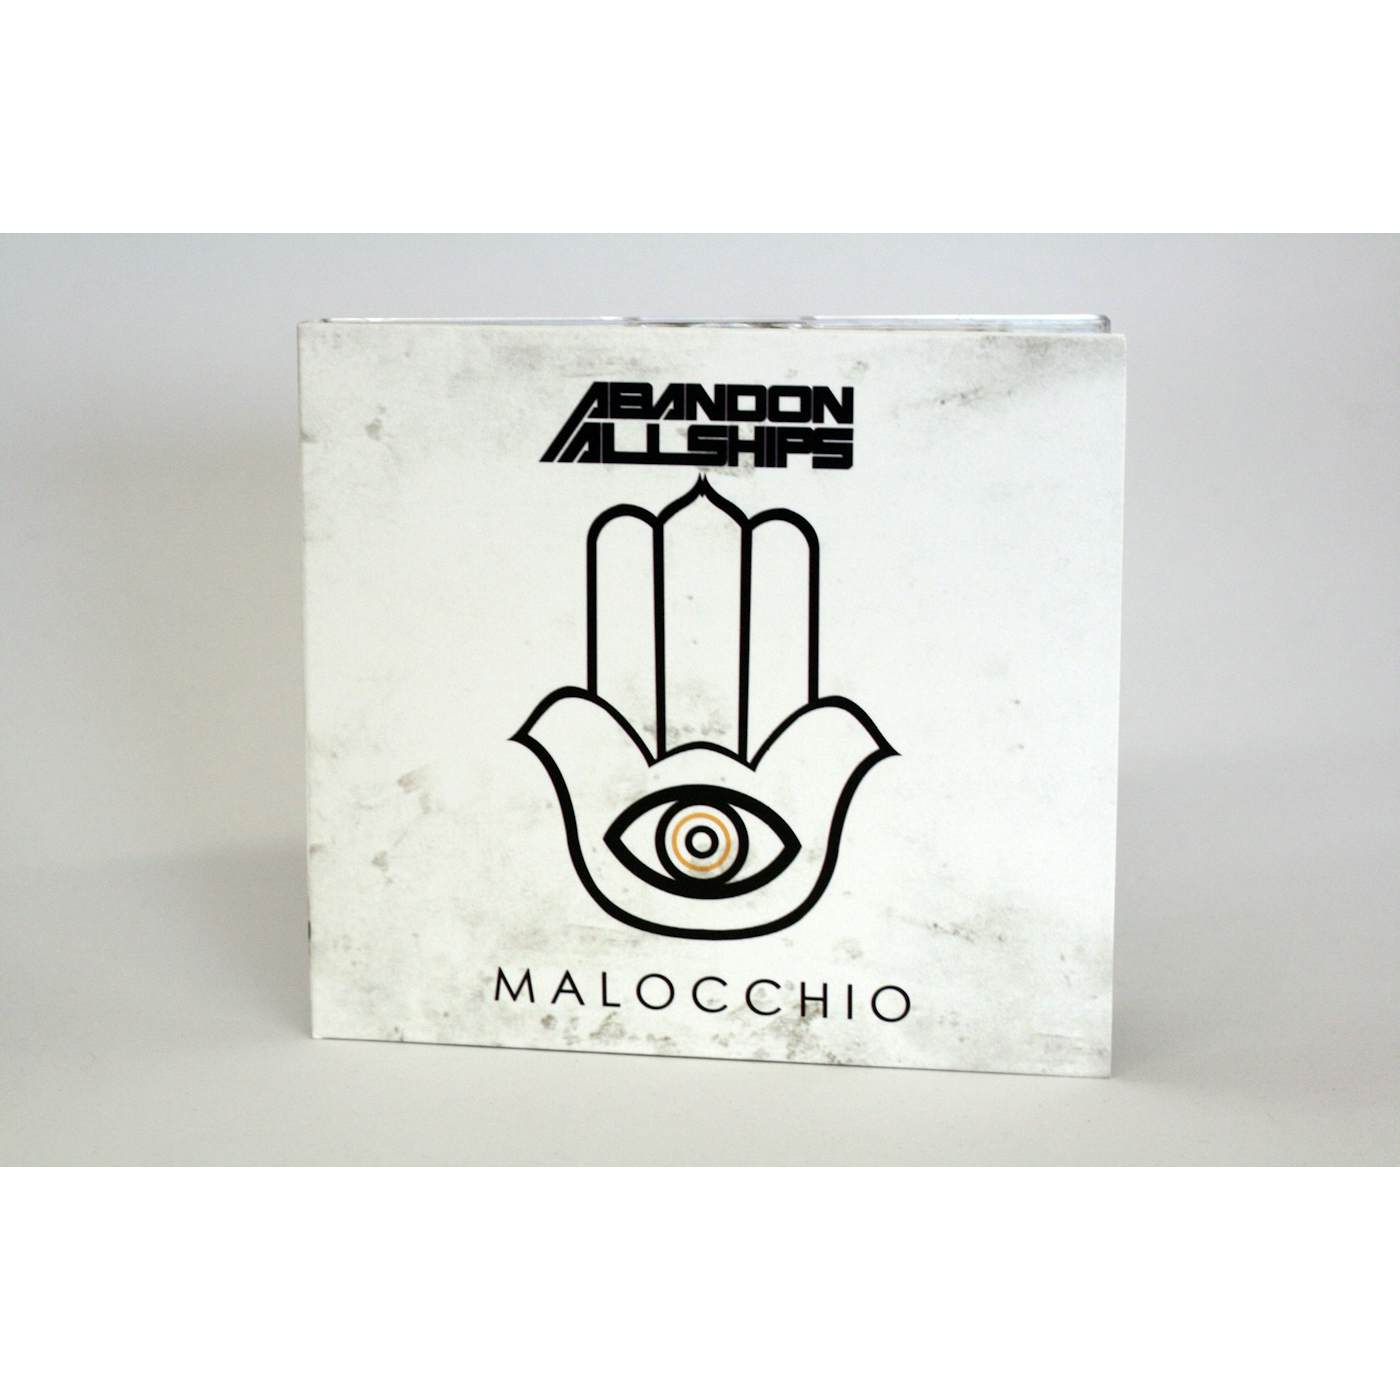 Abandon All Ships - Malocchio - CD (2014)